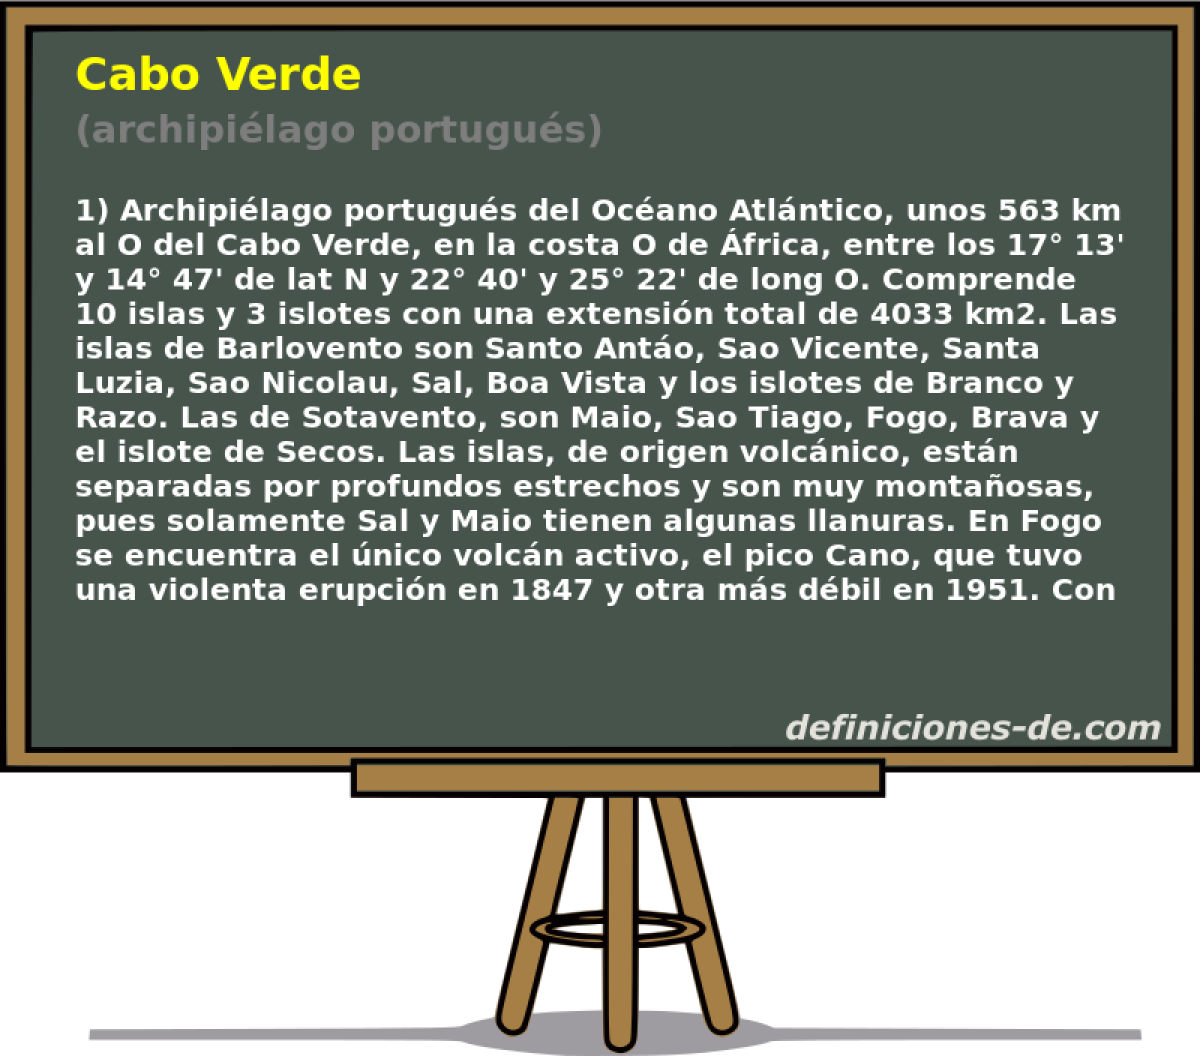 Cabo Verde (archipilago portugus)